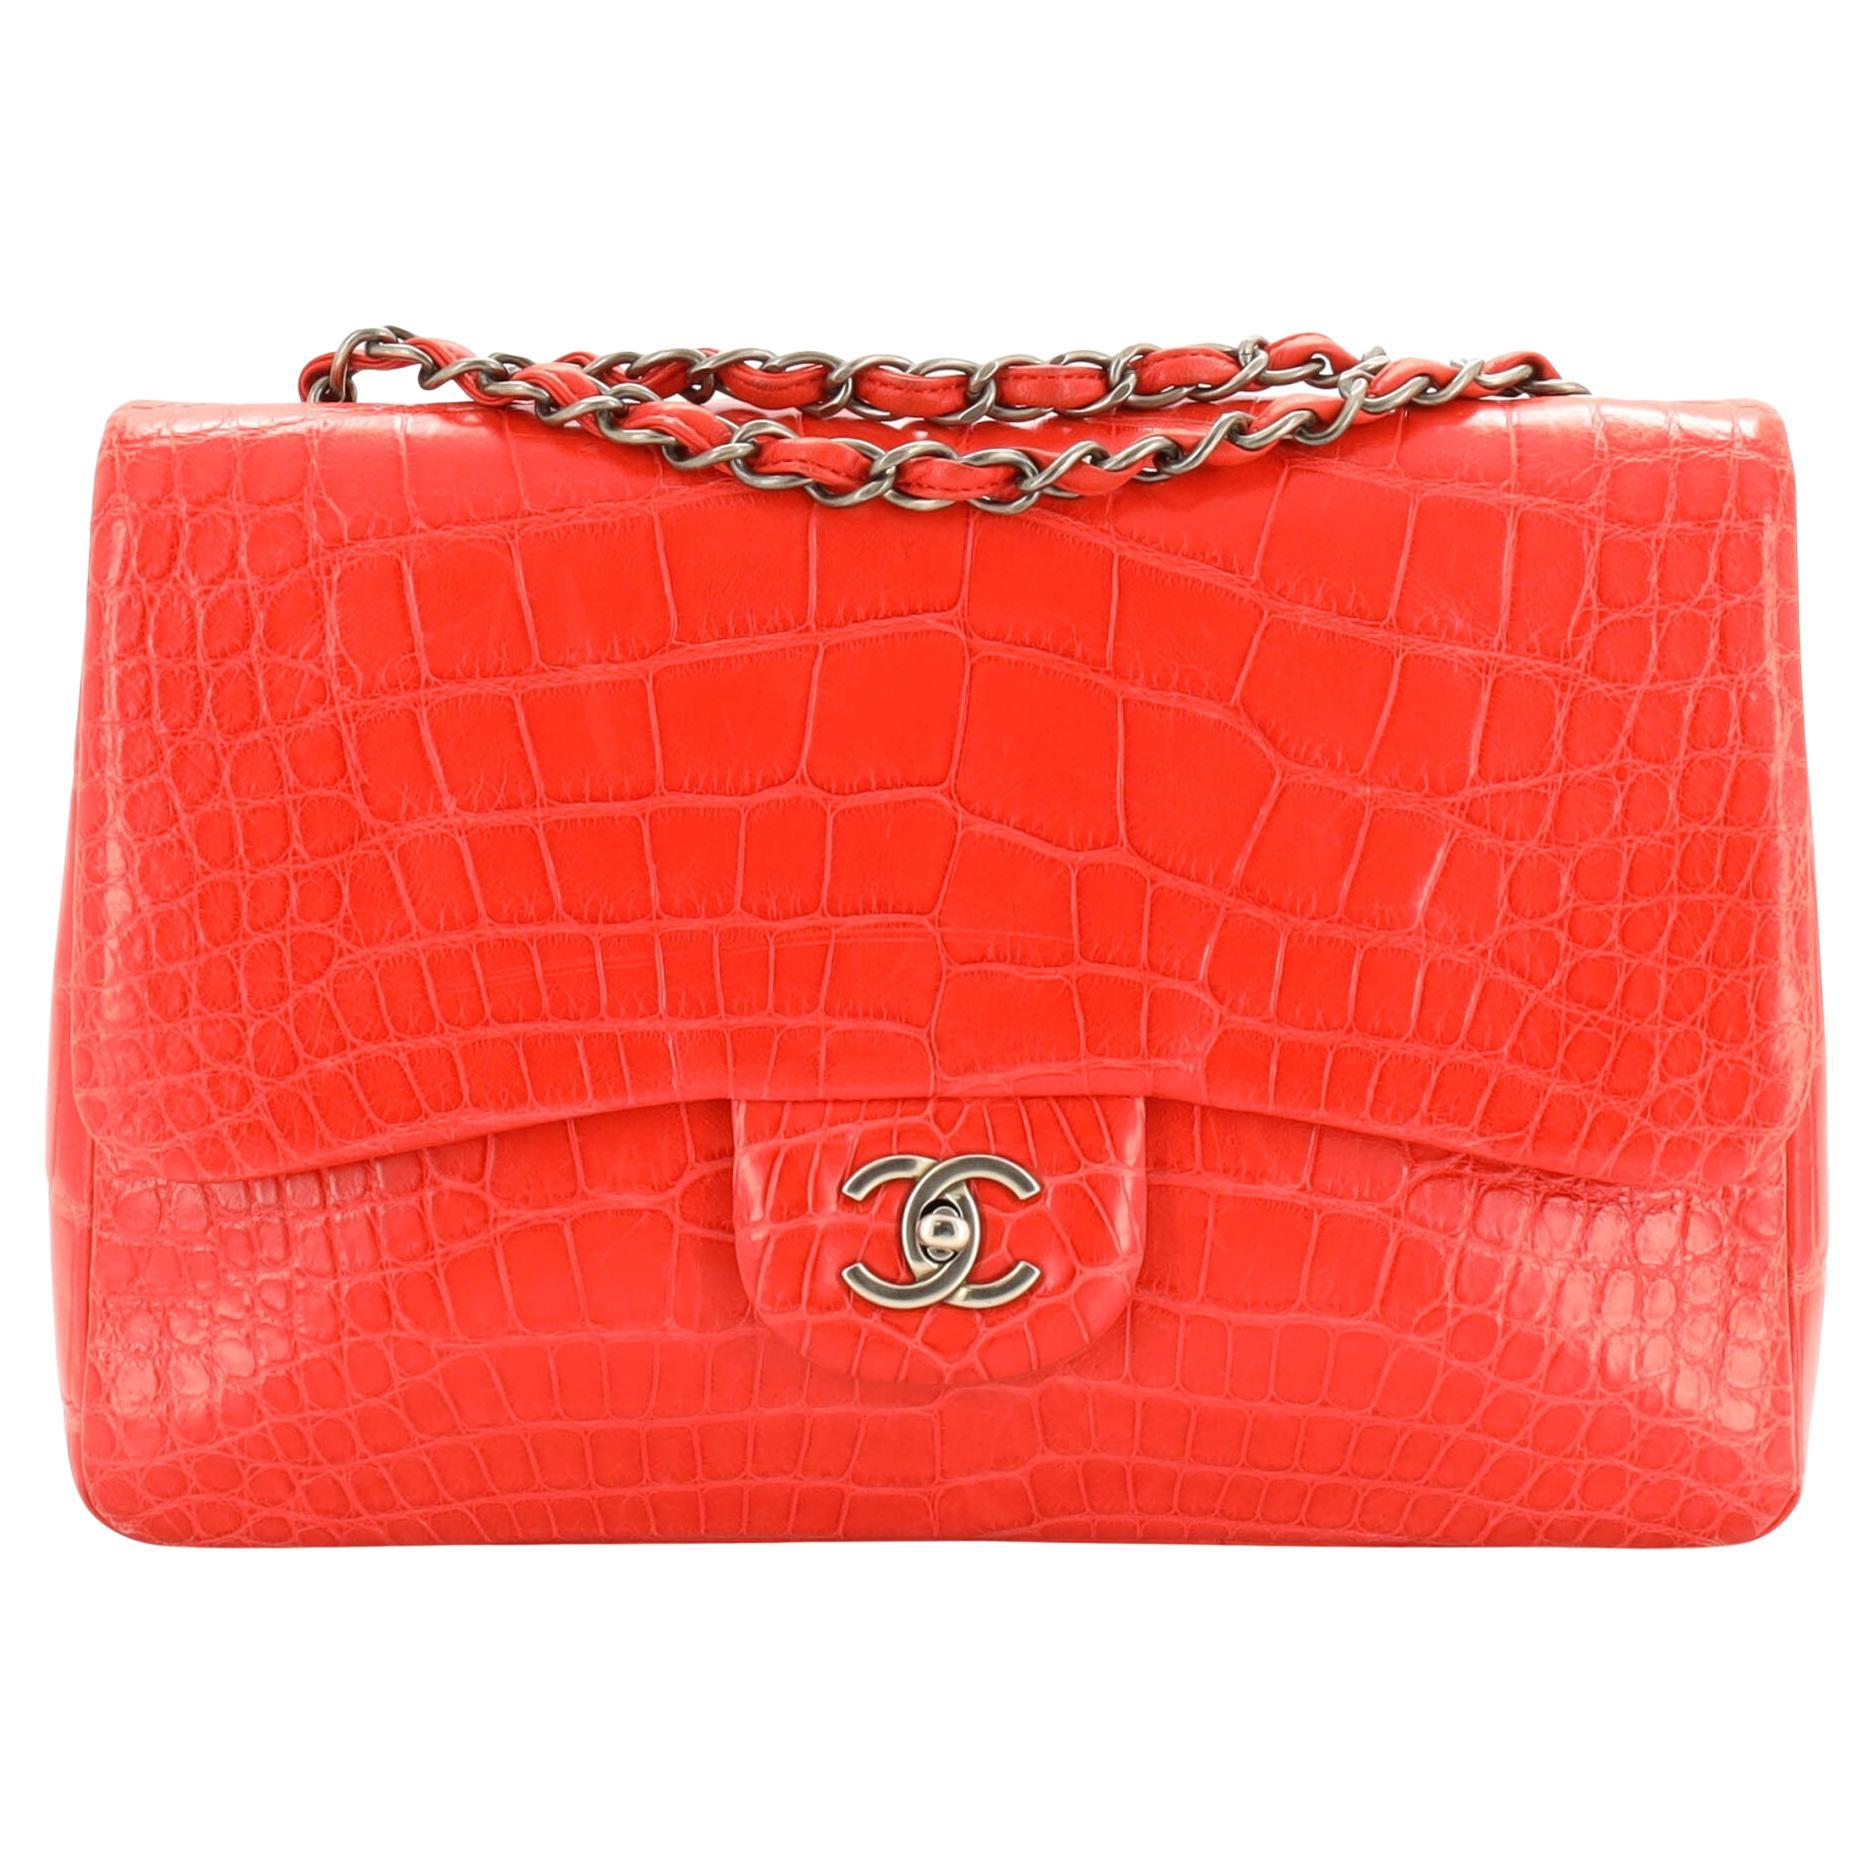 Chanel Classic Jumbo Double Flap Bag in Light Orange & Pink Patent